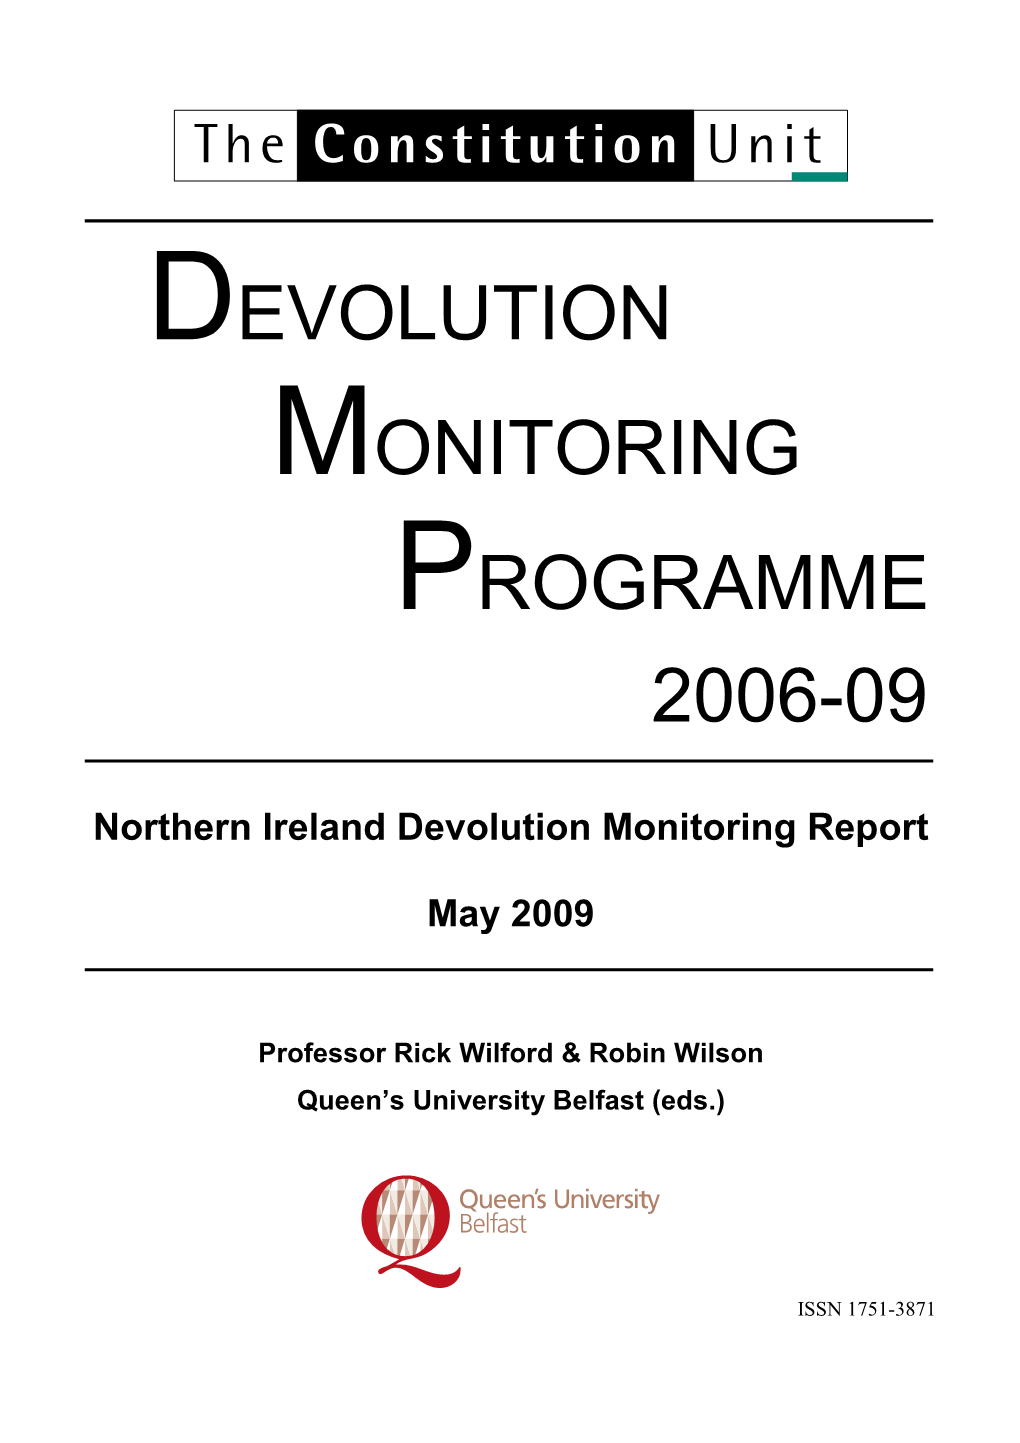 Northern Ireland Devolution Monitoring Report: May 2009